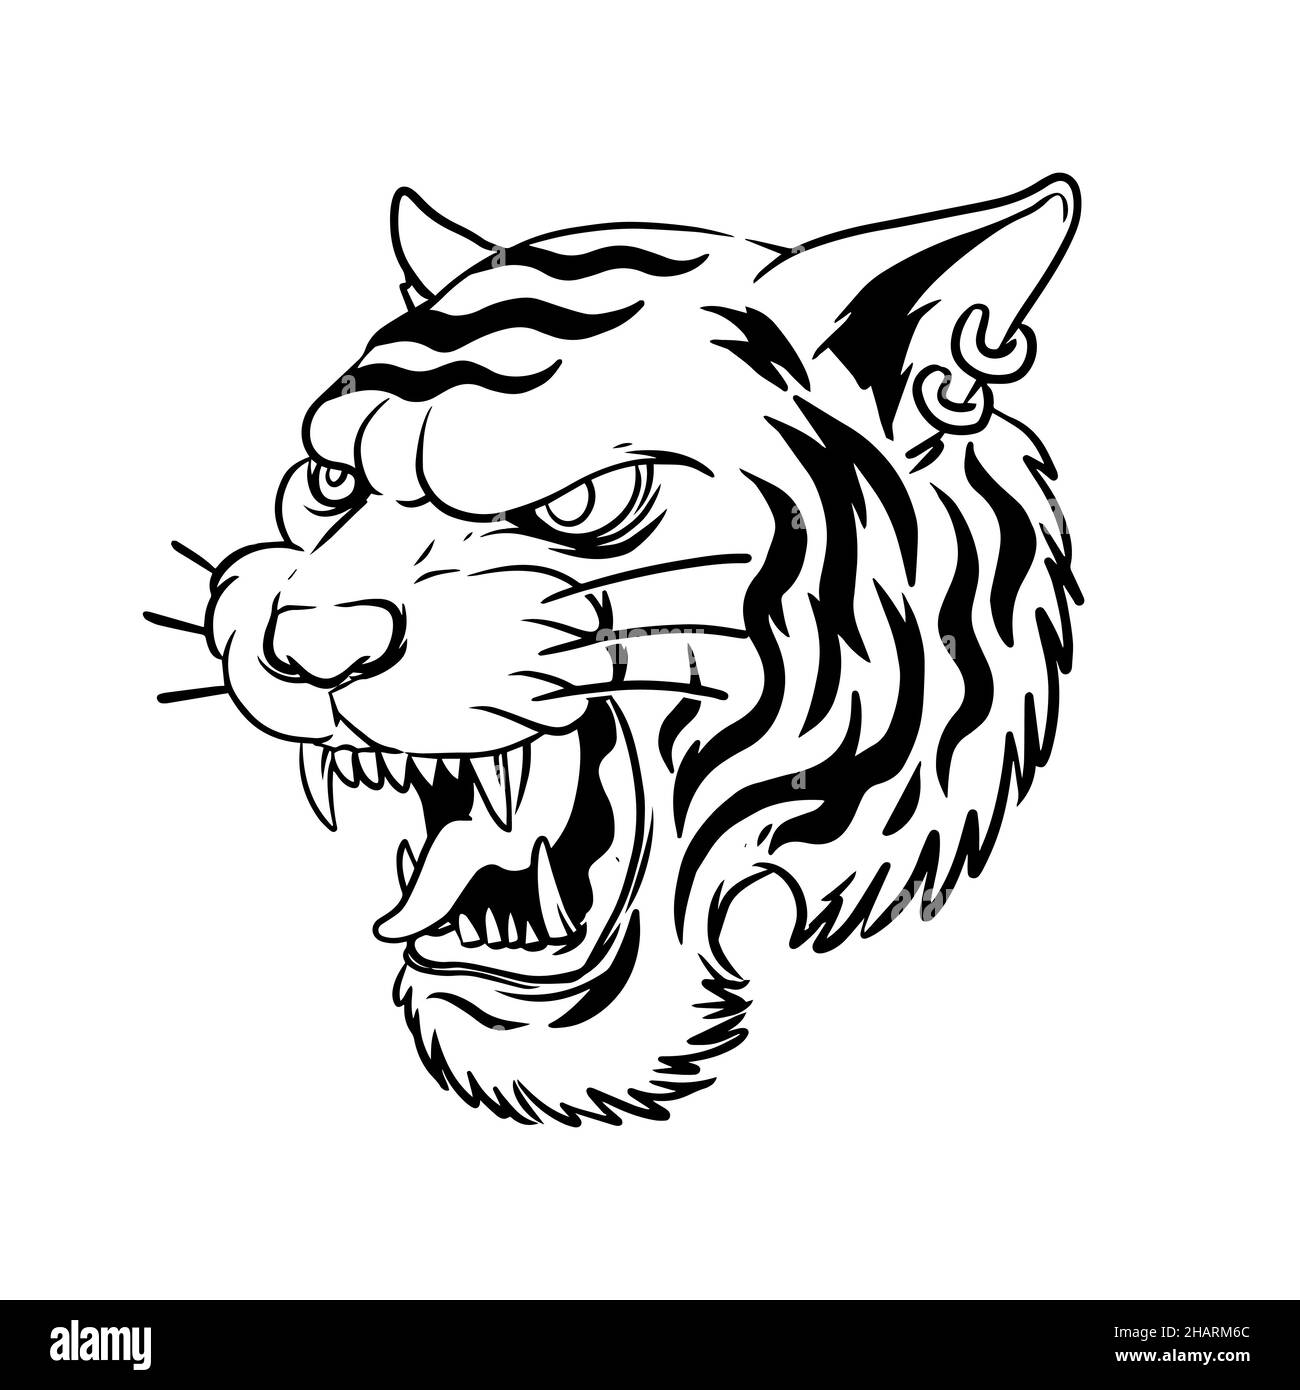 Tiger tattoo imãgen de stock en blanco y negro